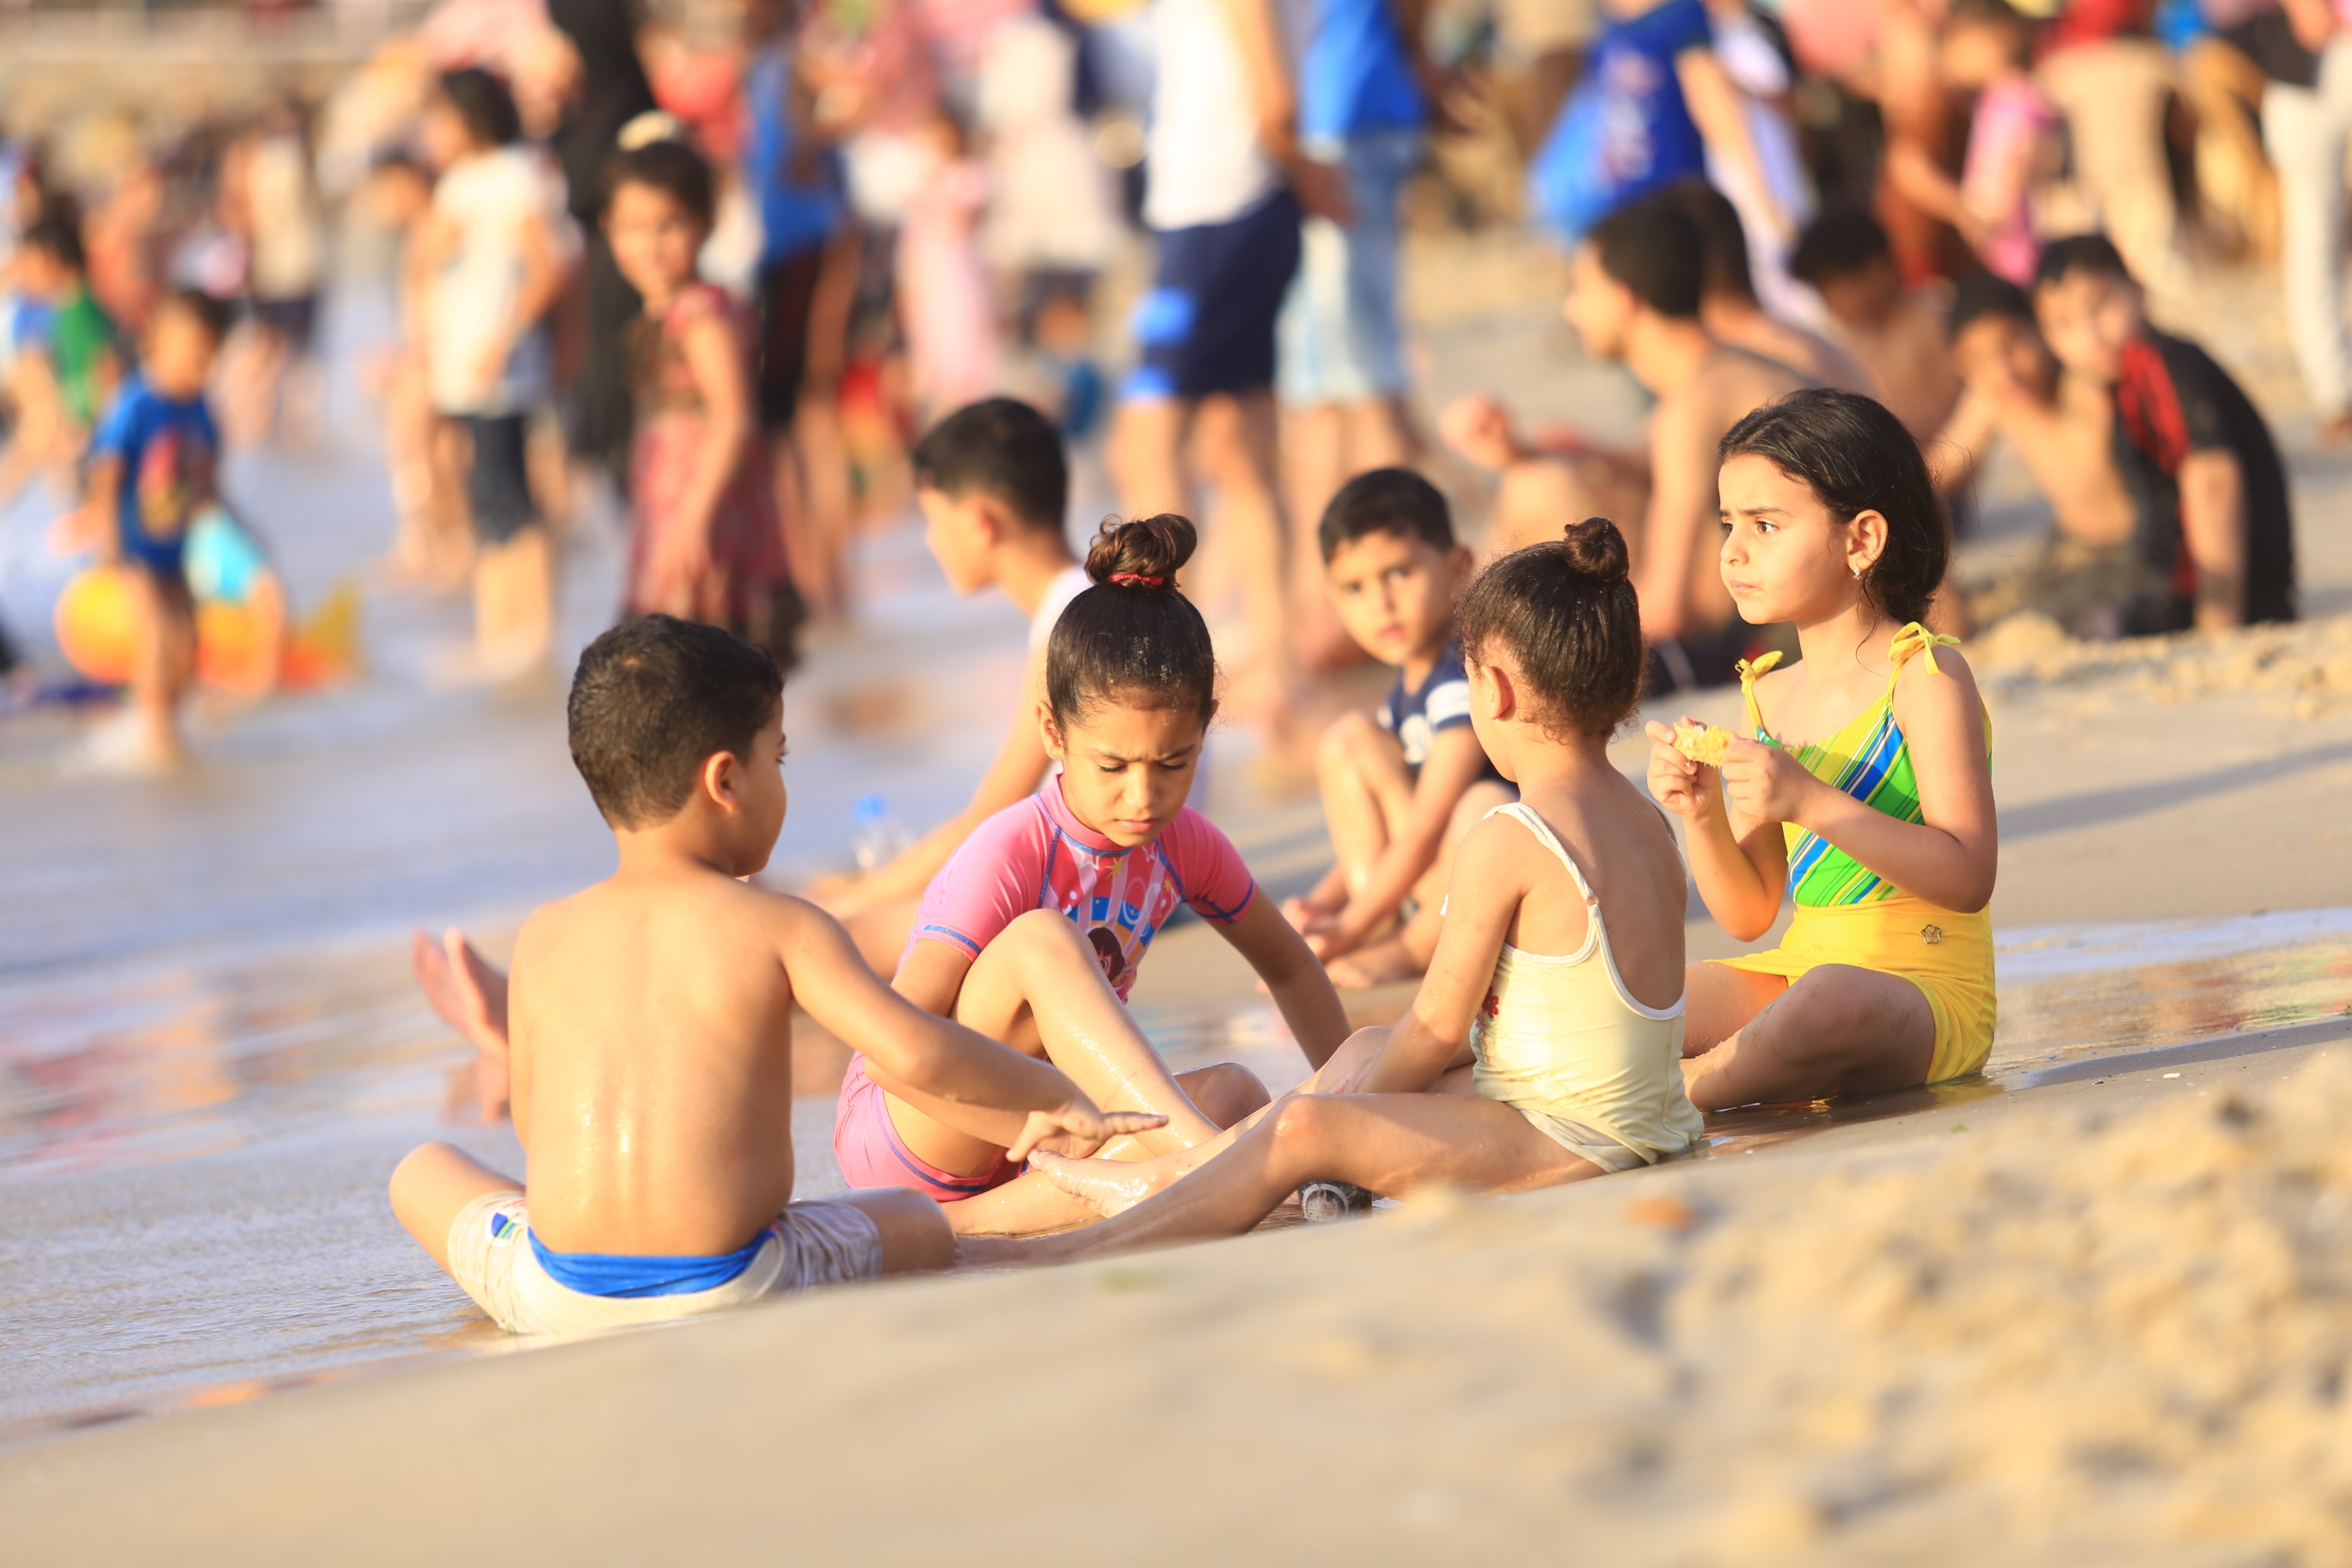 Gaza beaches slightly eases people's suffering under Israeli blockade